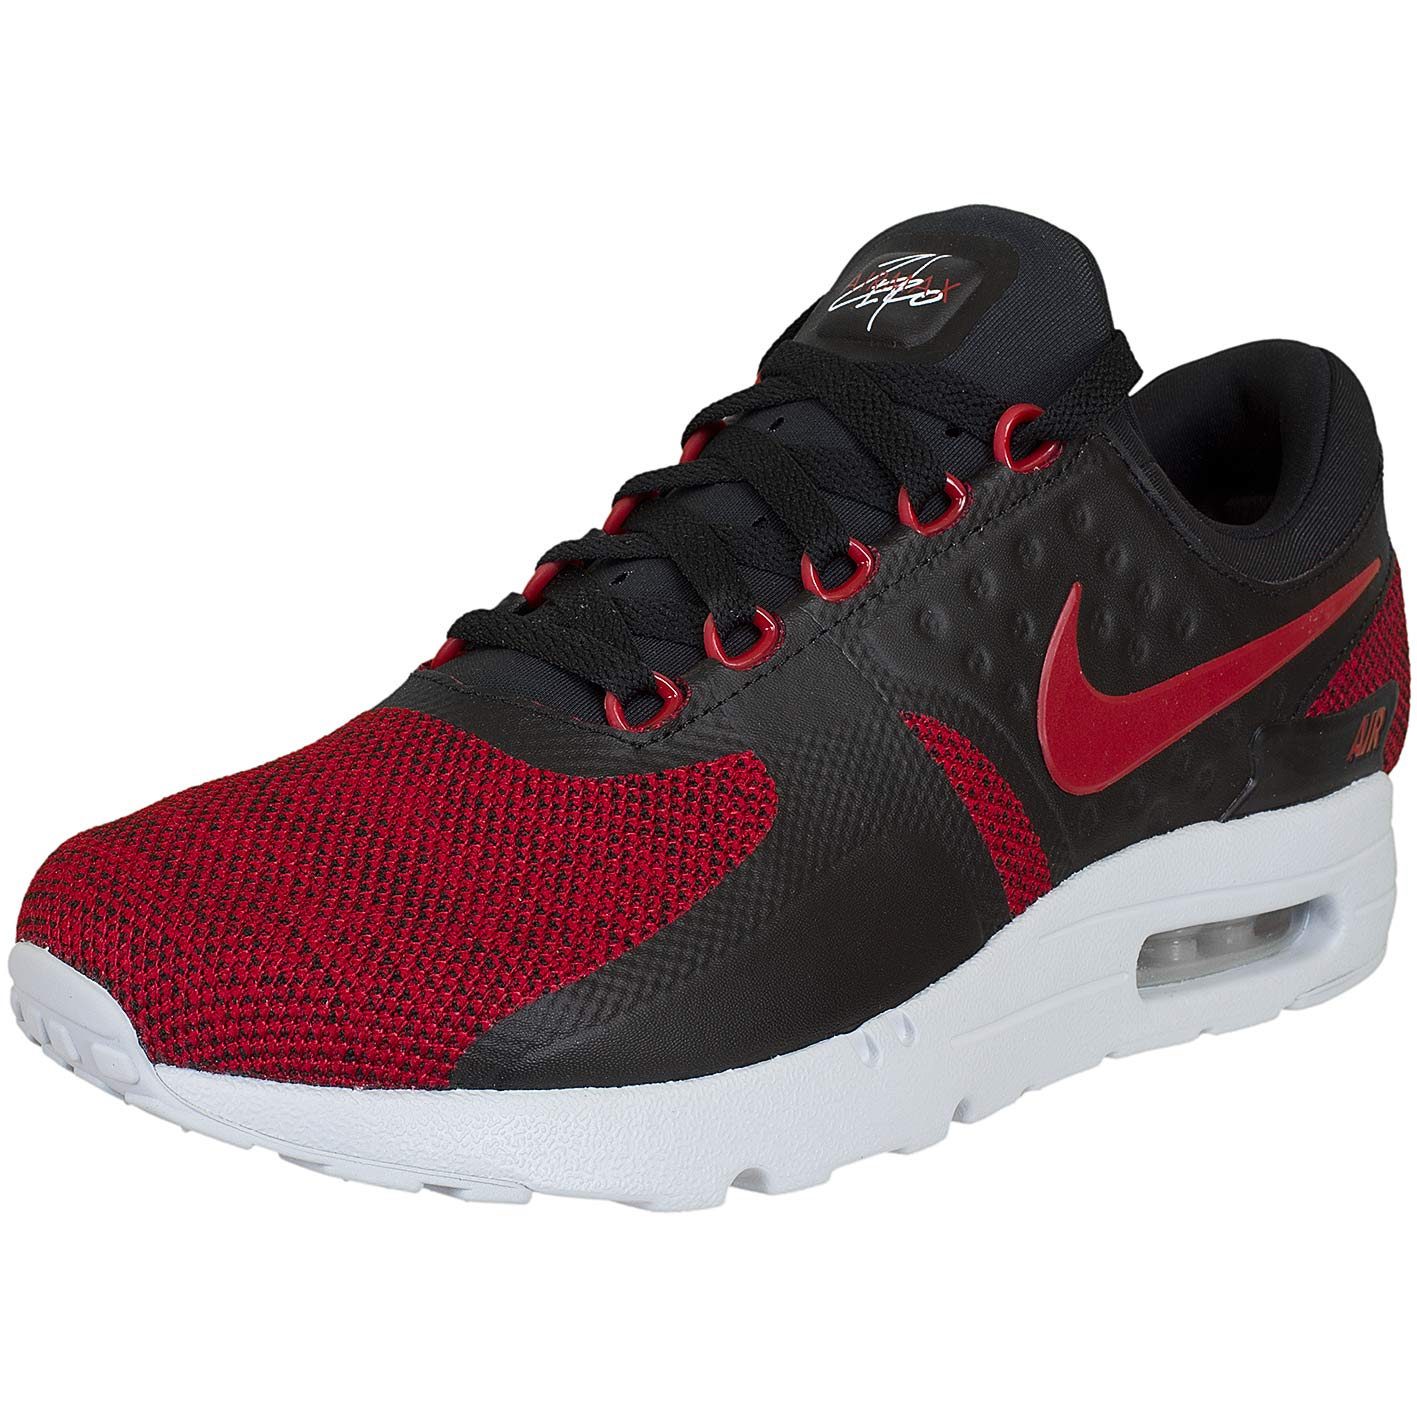 ☆ Nike Sneaker Air Max Zero SE schwarz/rot - hier bestellen!